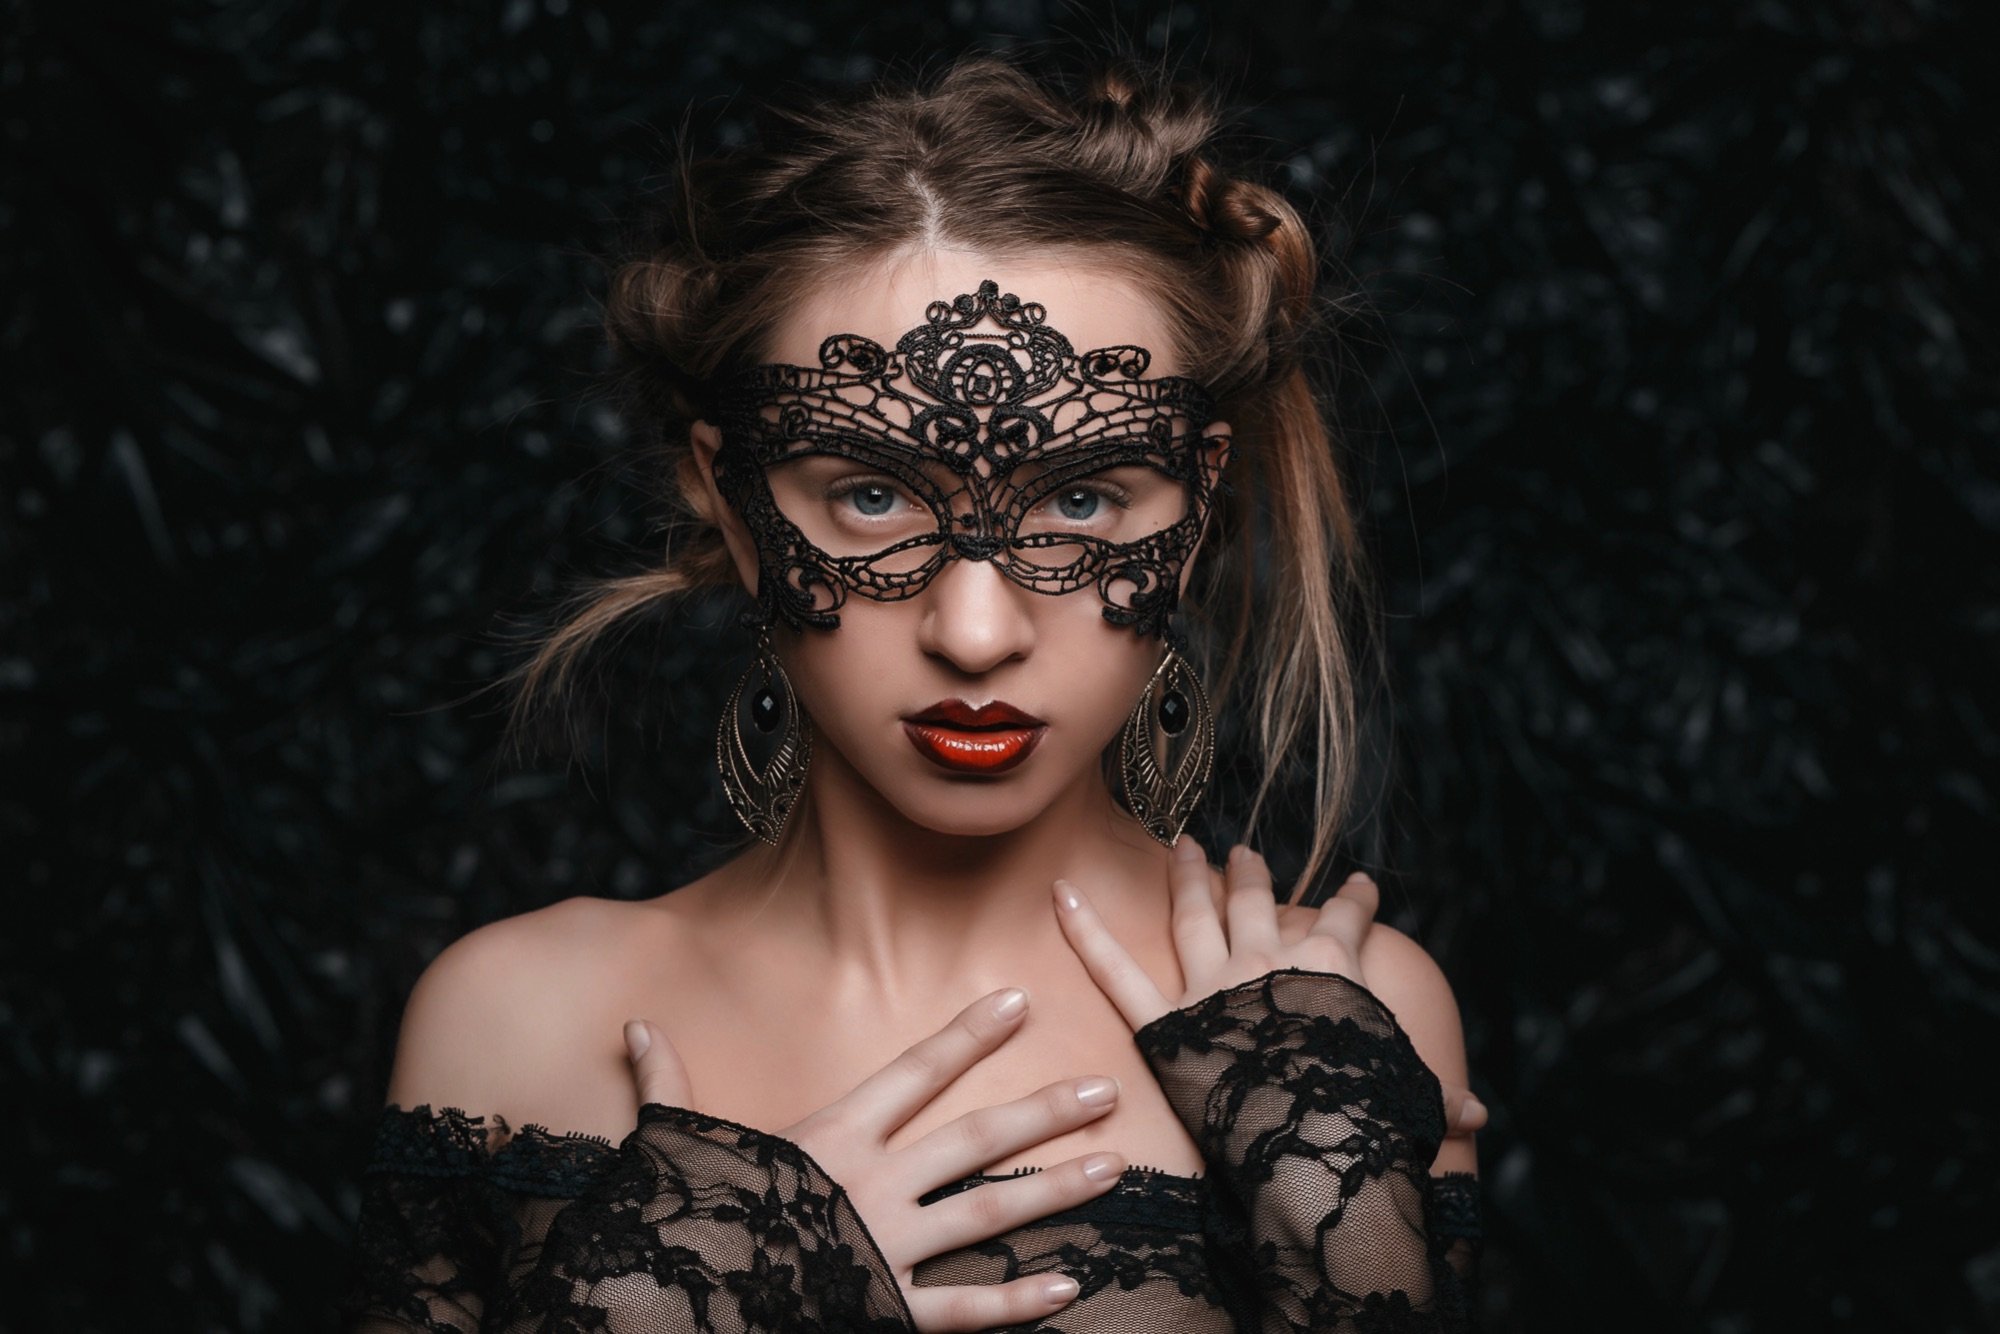 Stunning blonde haired girl wearing a black bespoke lace mask